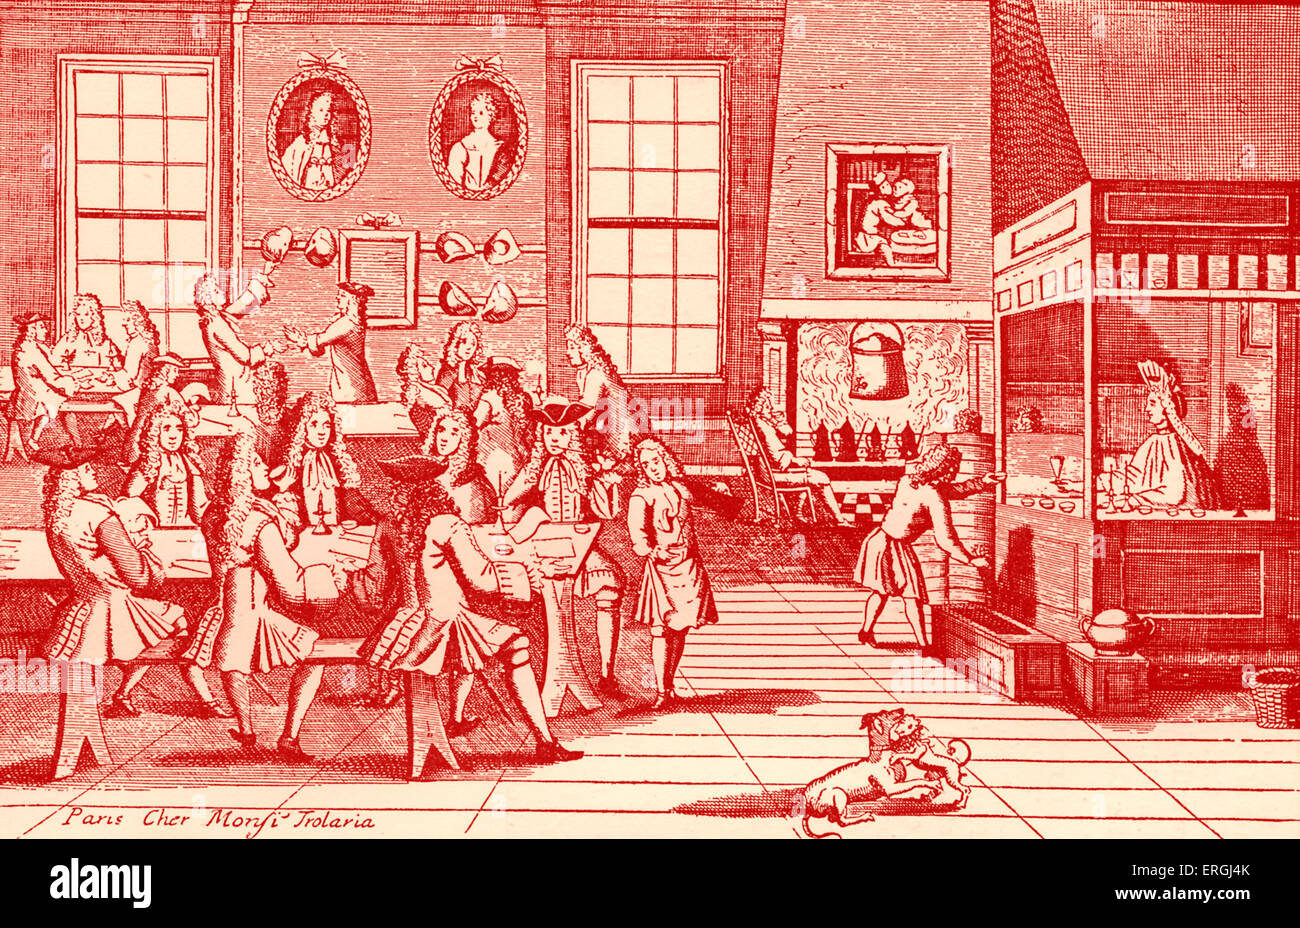 Kaffee-Haus aus dem 18. Jahrhundert. Gravur. Stockfoto